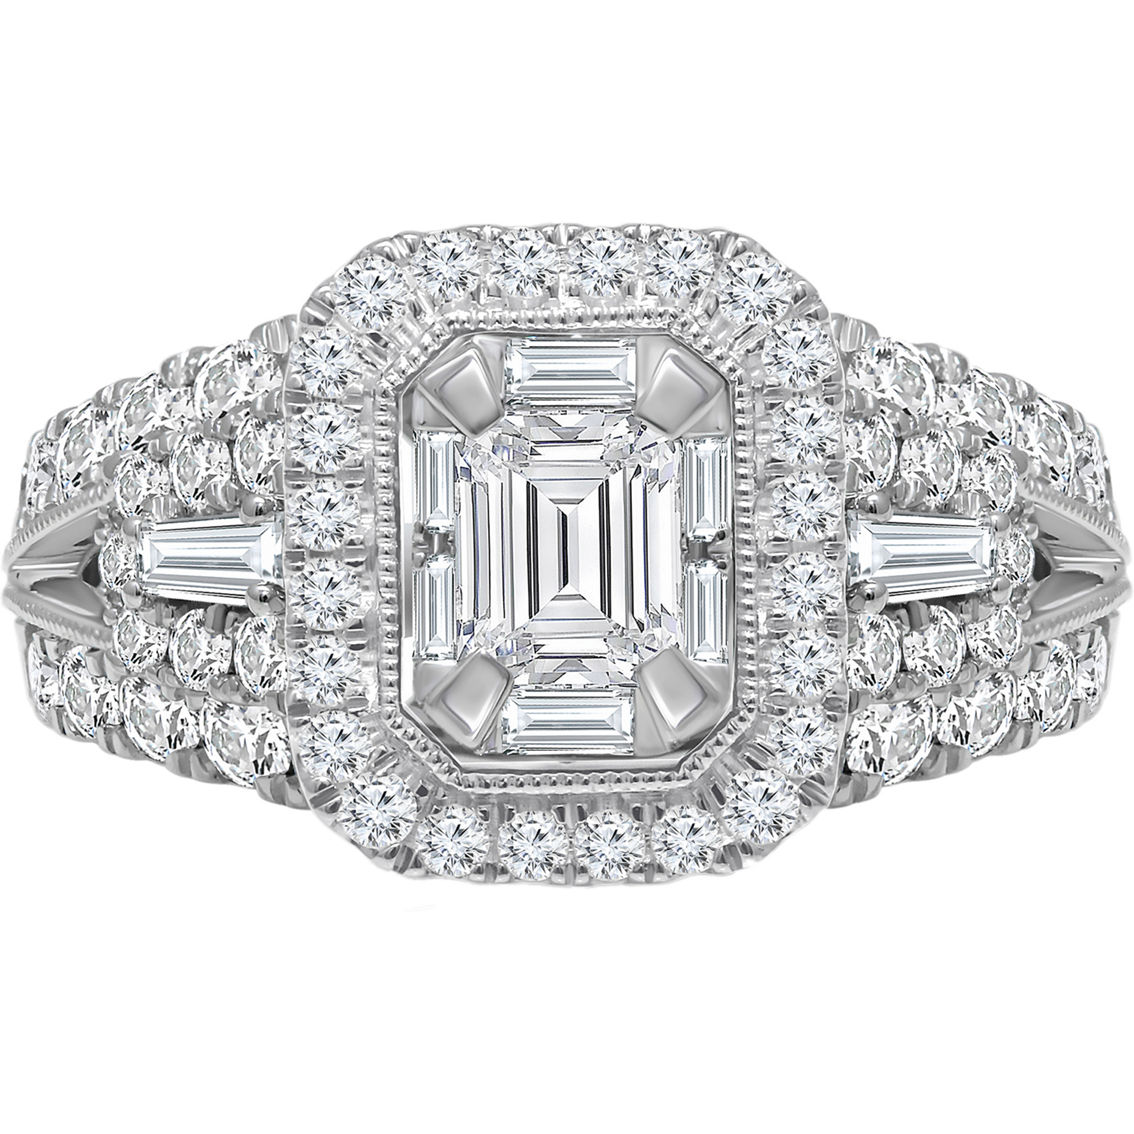 American Rose 14K White Gold 2 CTW Emerald Cut Diamond Engagement Ring - Image 2 of 5